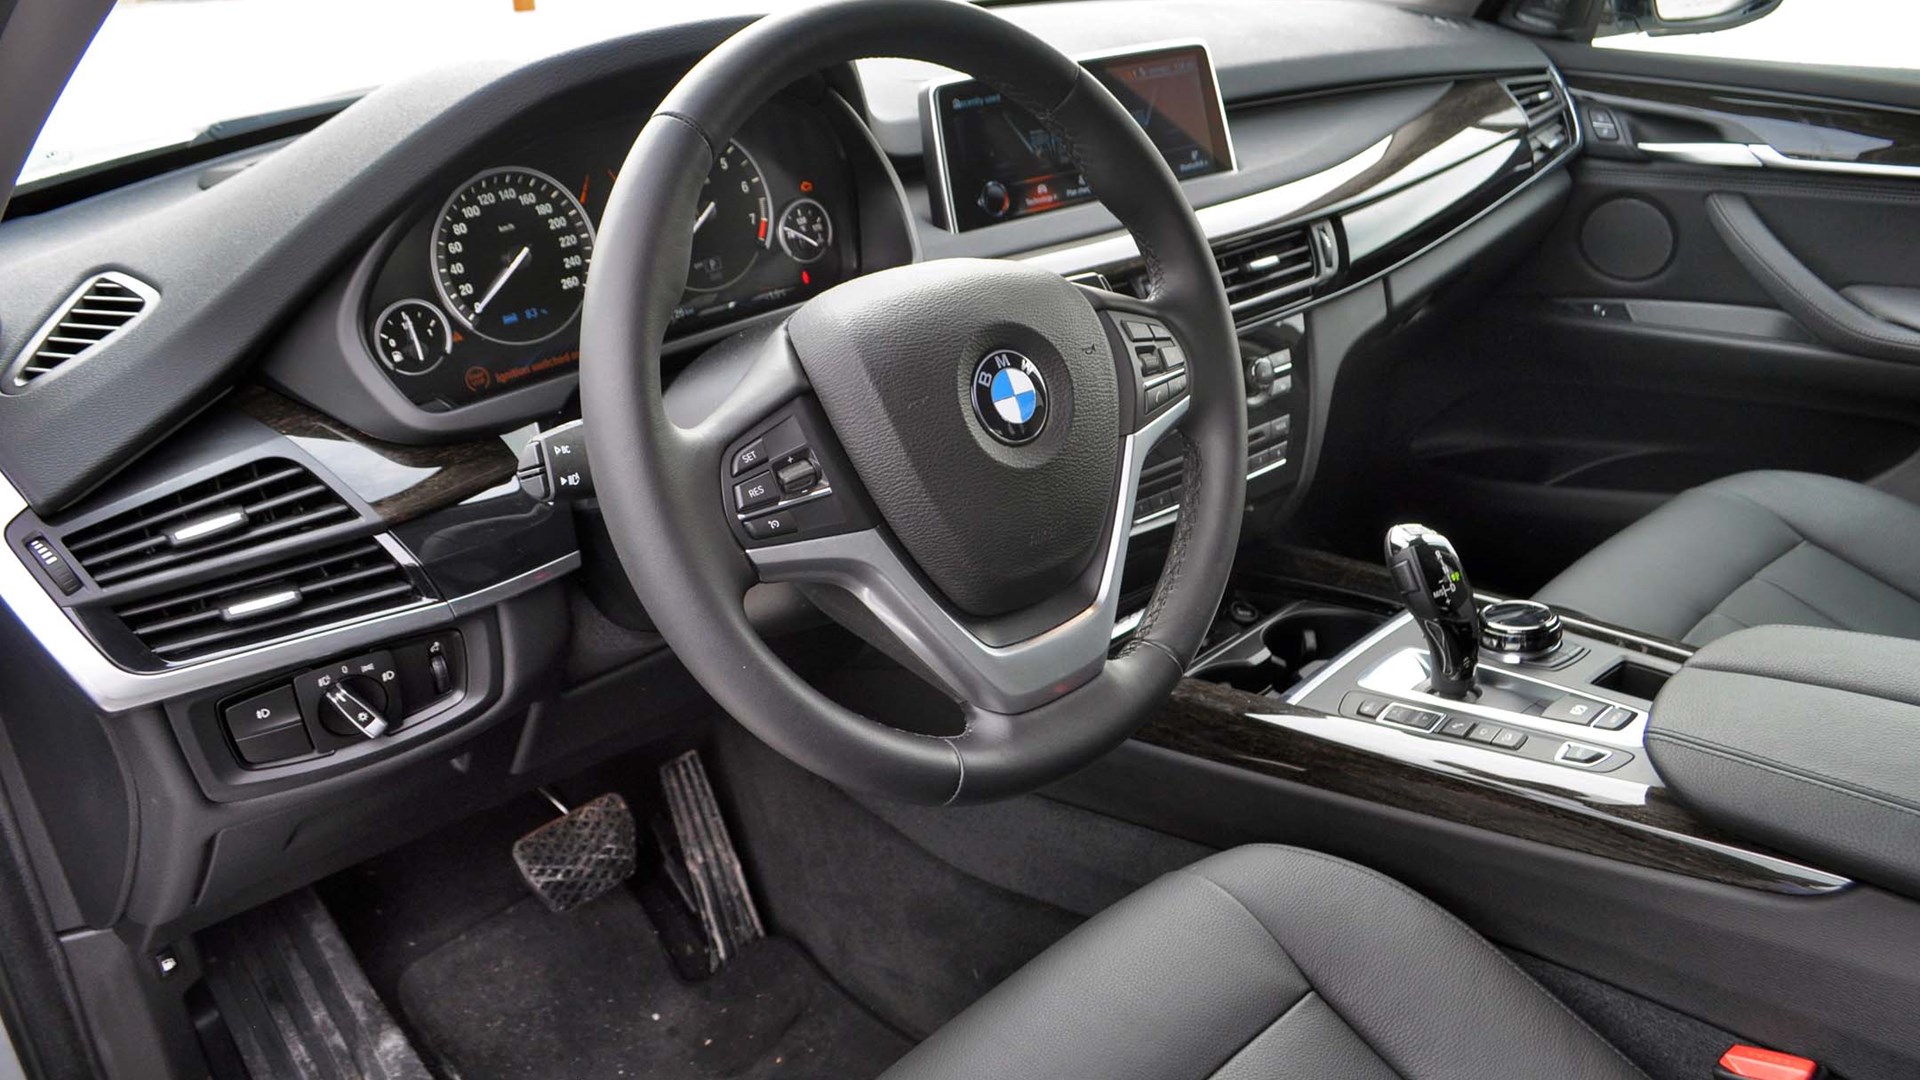 2017 BMW X5 40e vs 2017 BMW X5 35i Comparison Test Review | AutoTrader.ca